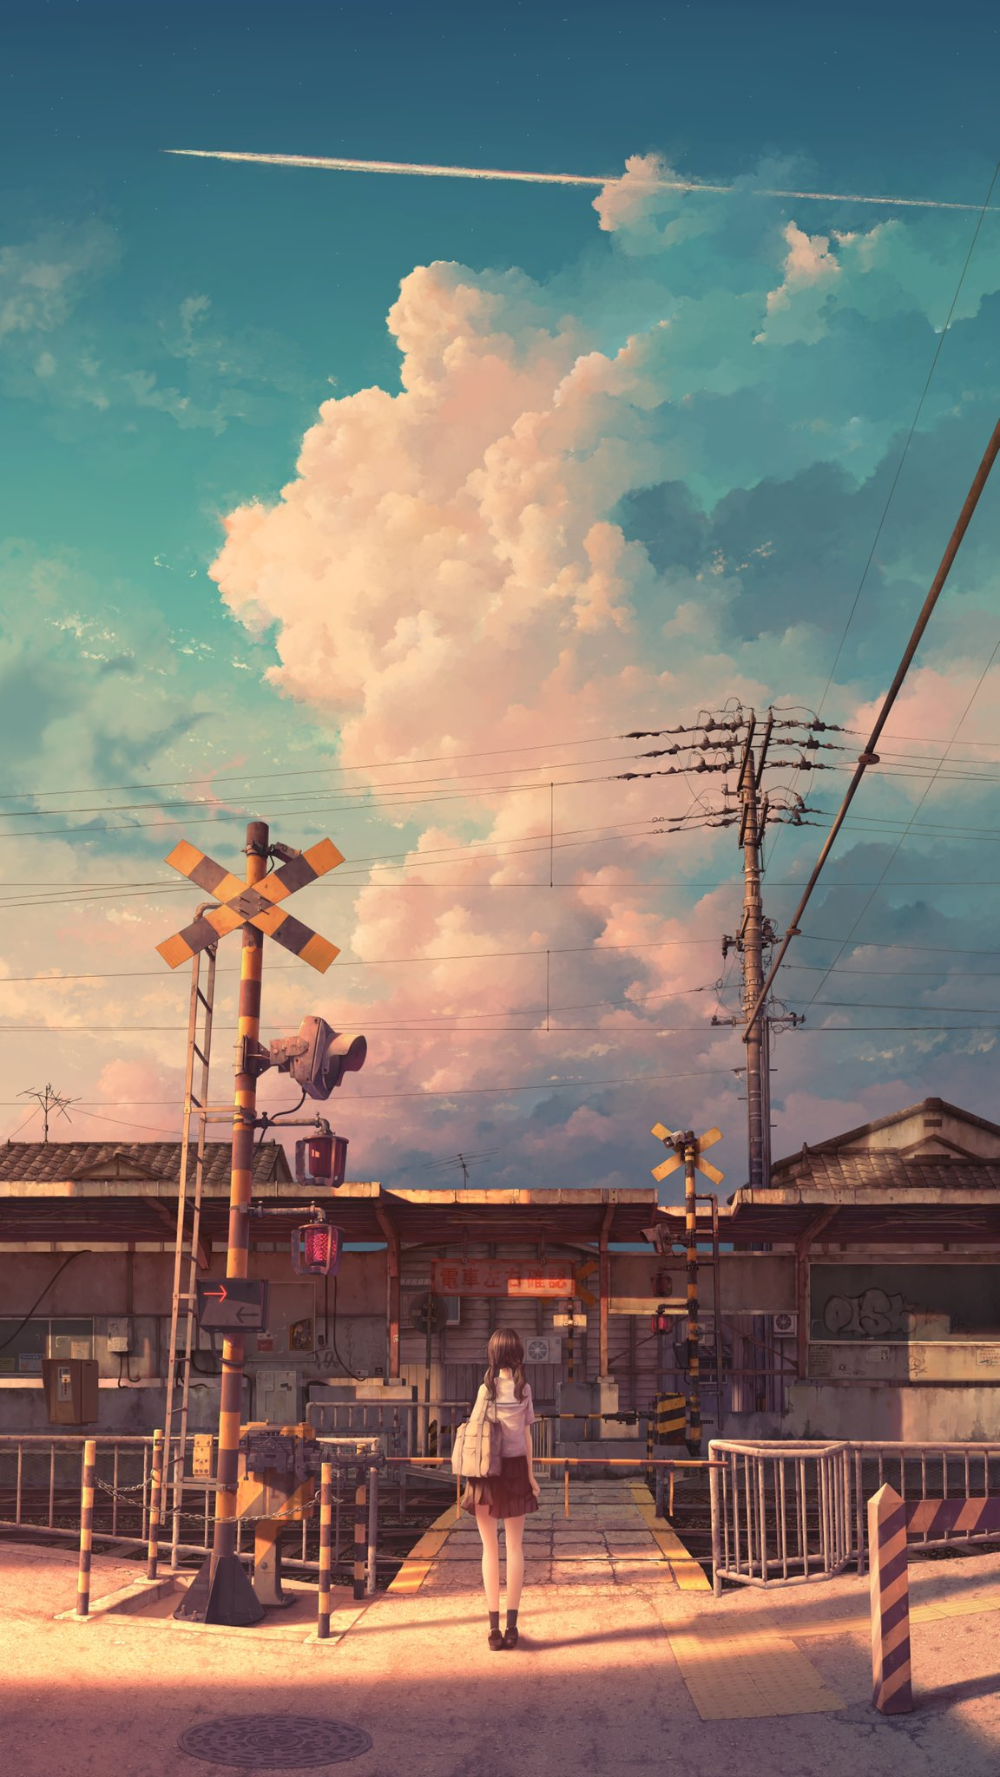 池上幸輝 Koki Ikegami on Twitter. Anime scenery wallpaper, Anime background wallpaper, Anime scenery